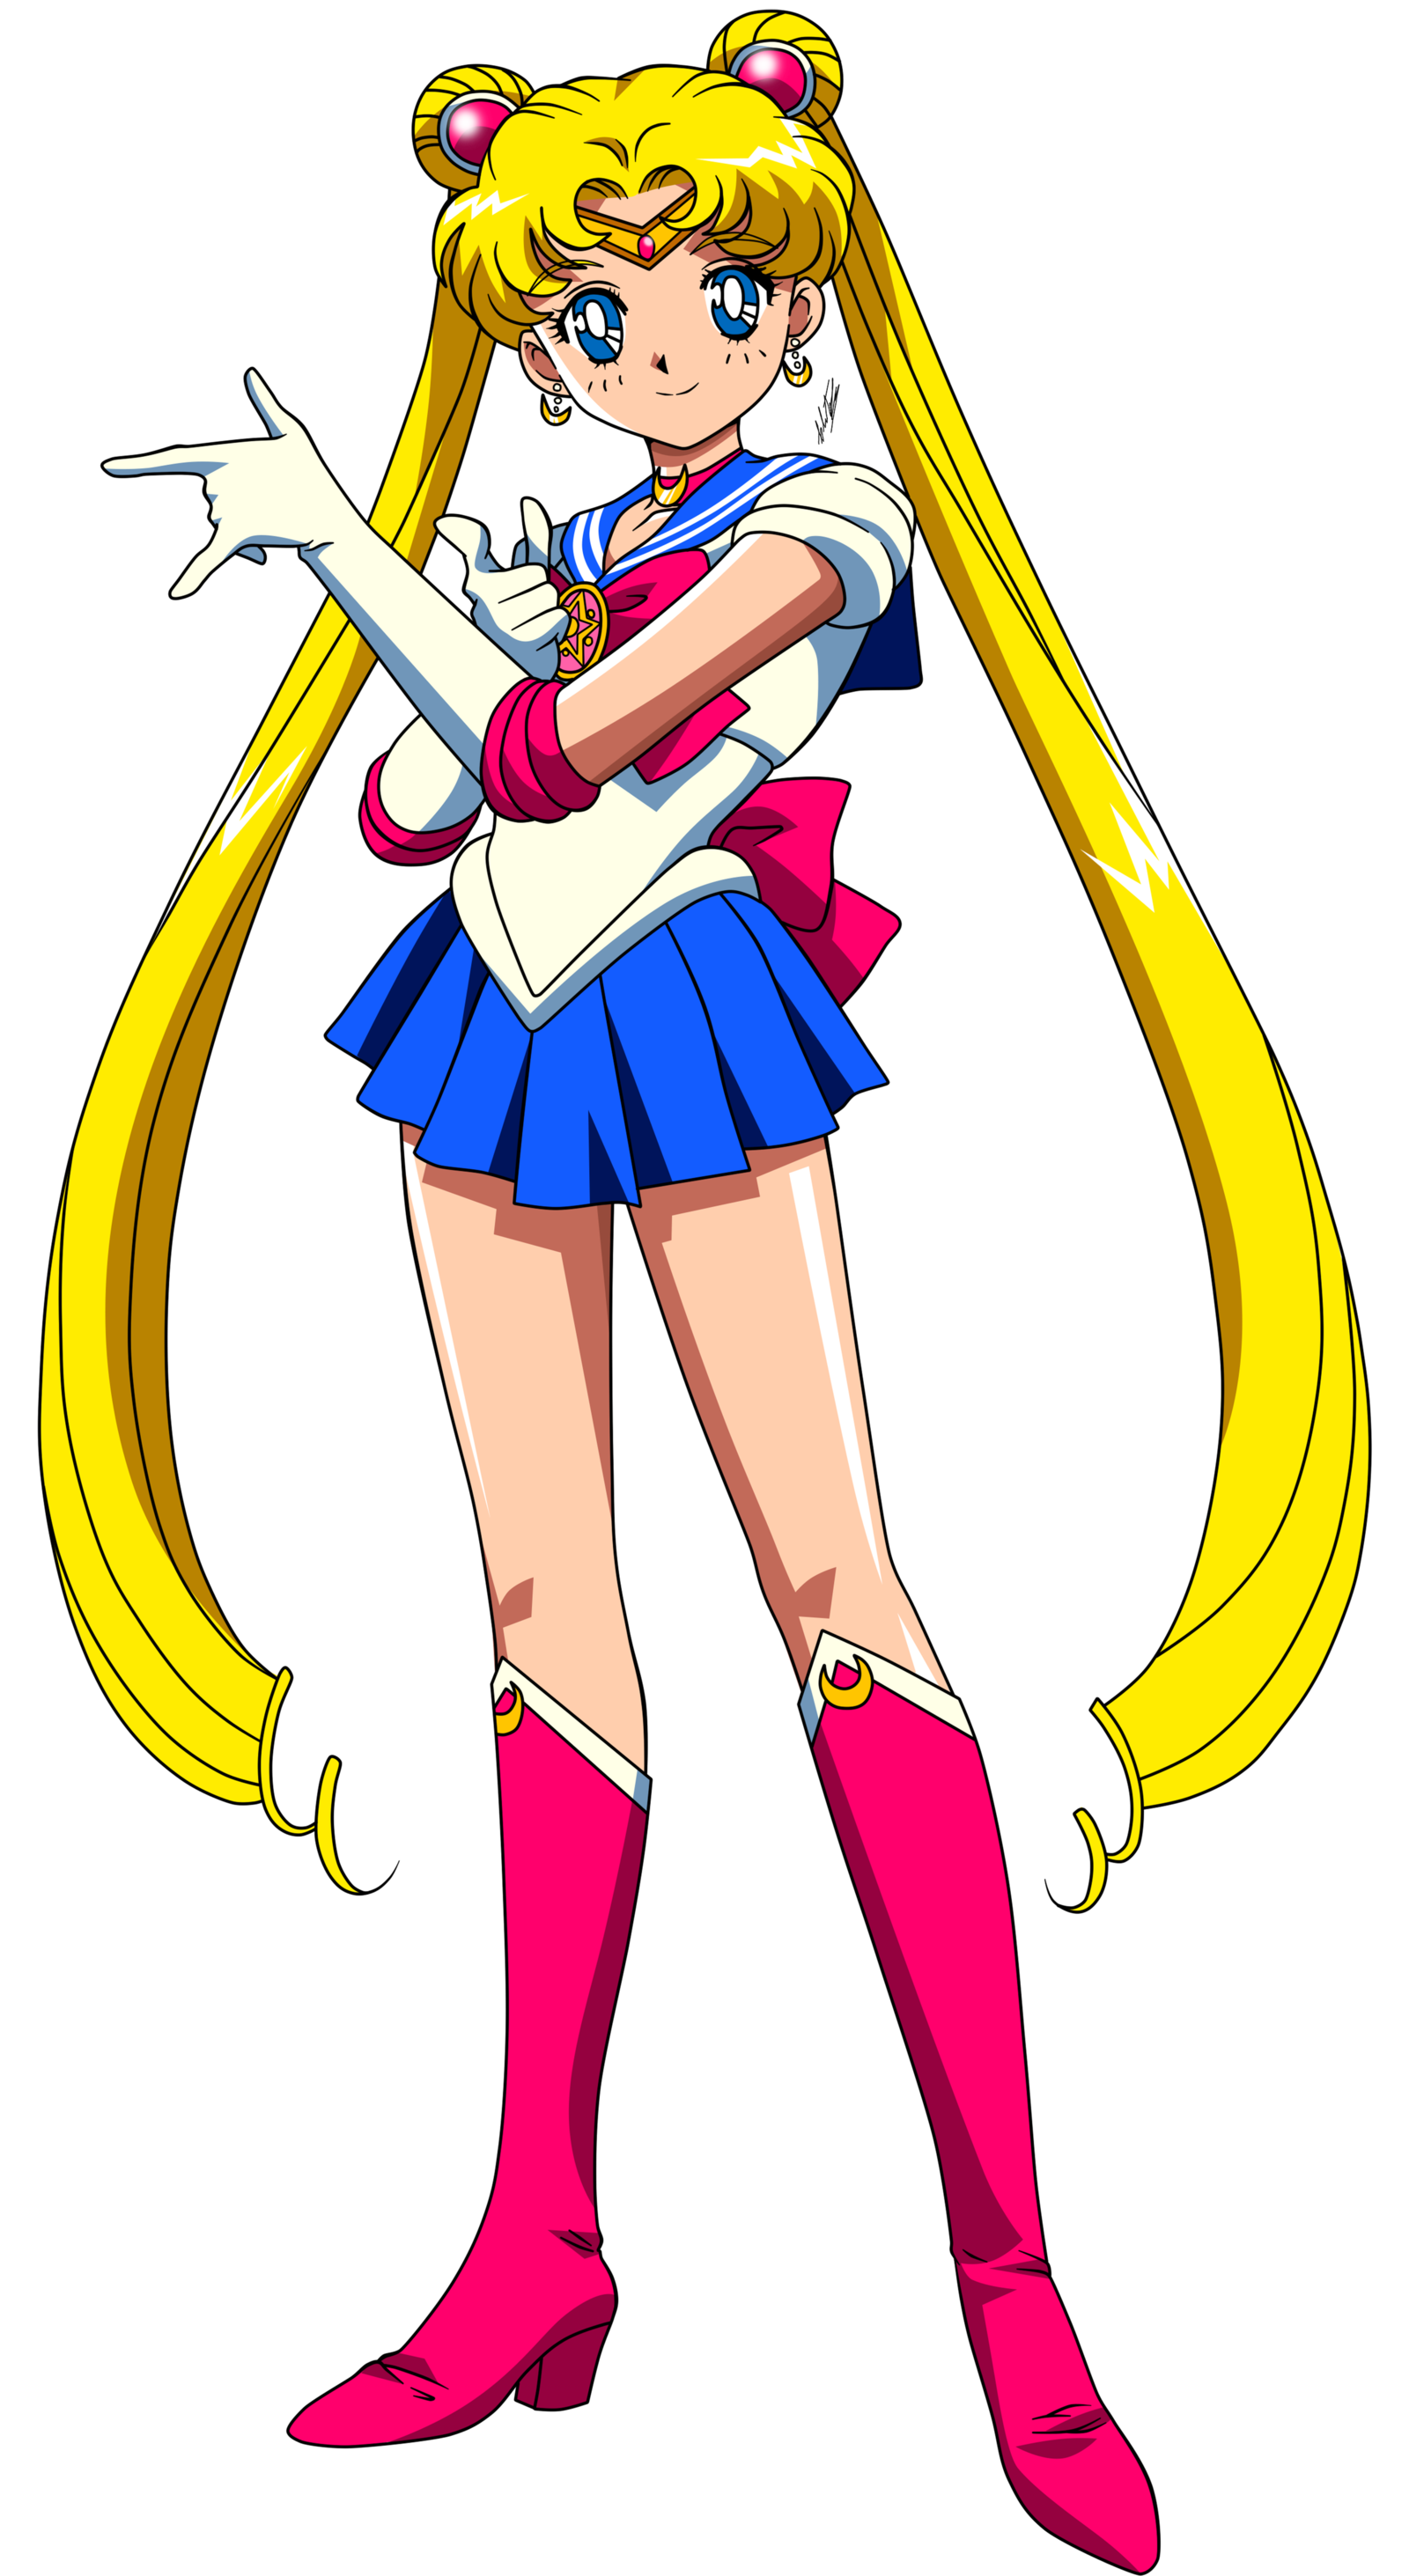 Sailor Moon #22